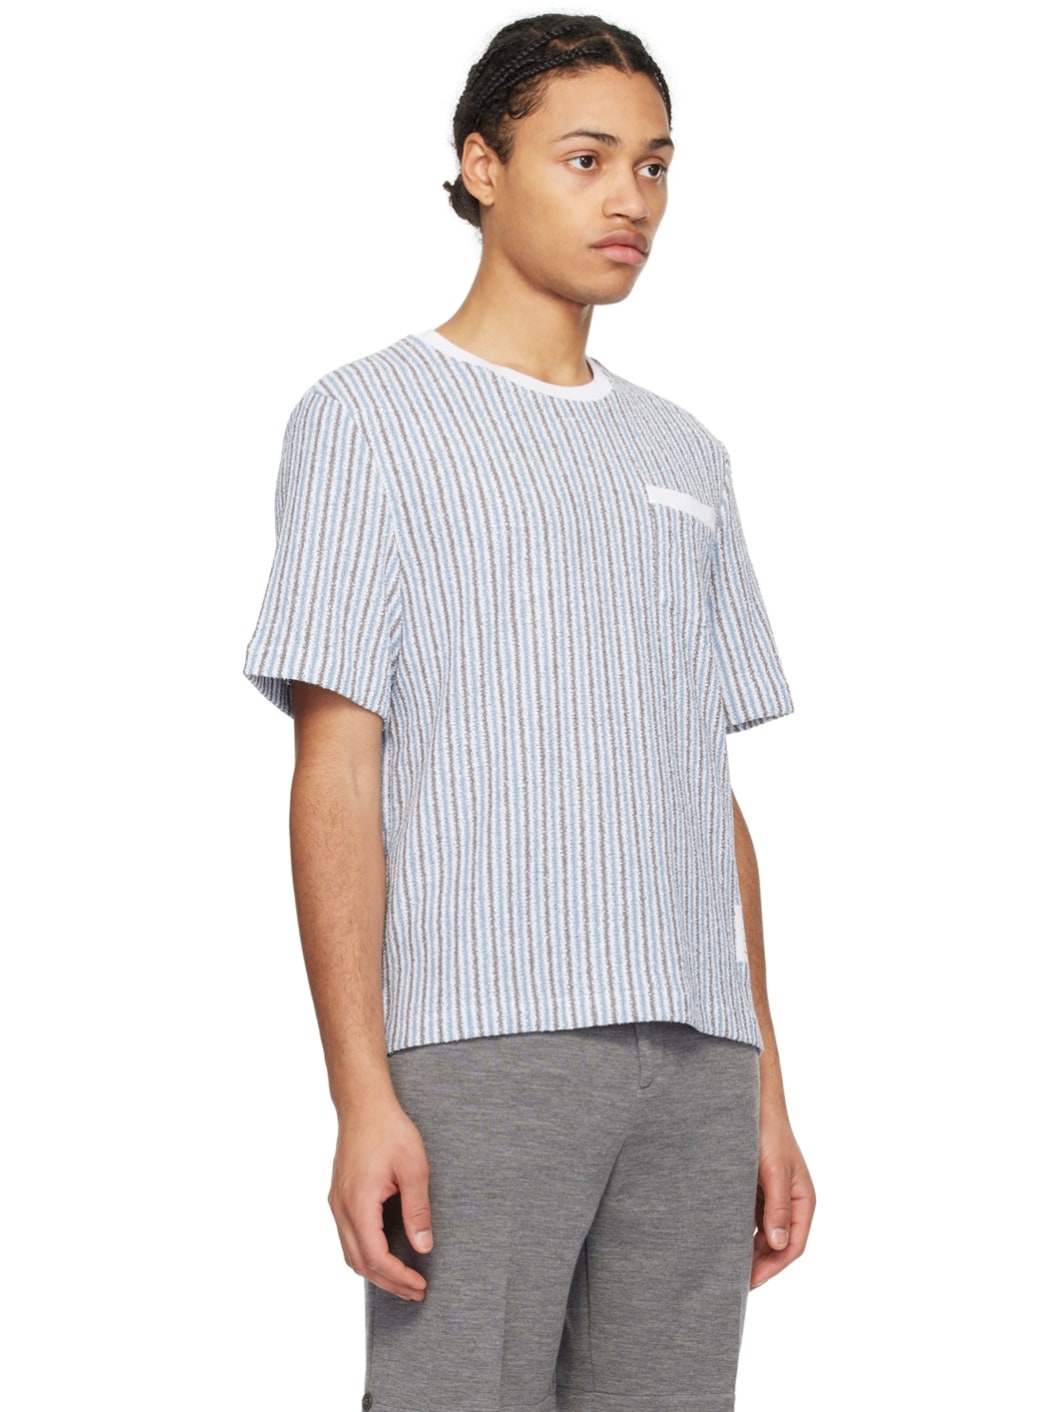 Blue & Gray Striped T-Shirt - 2